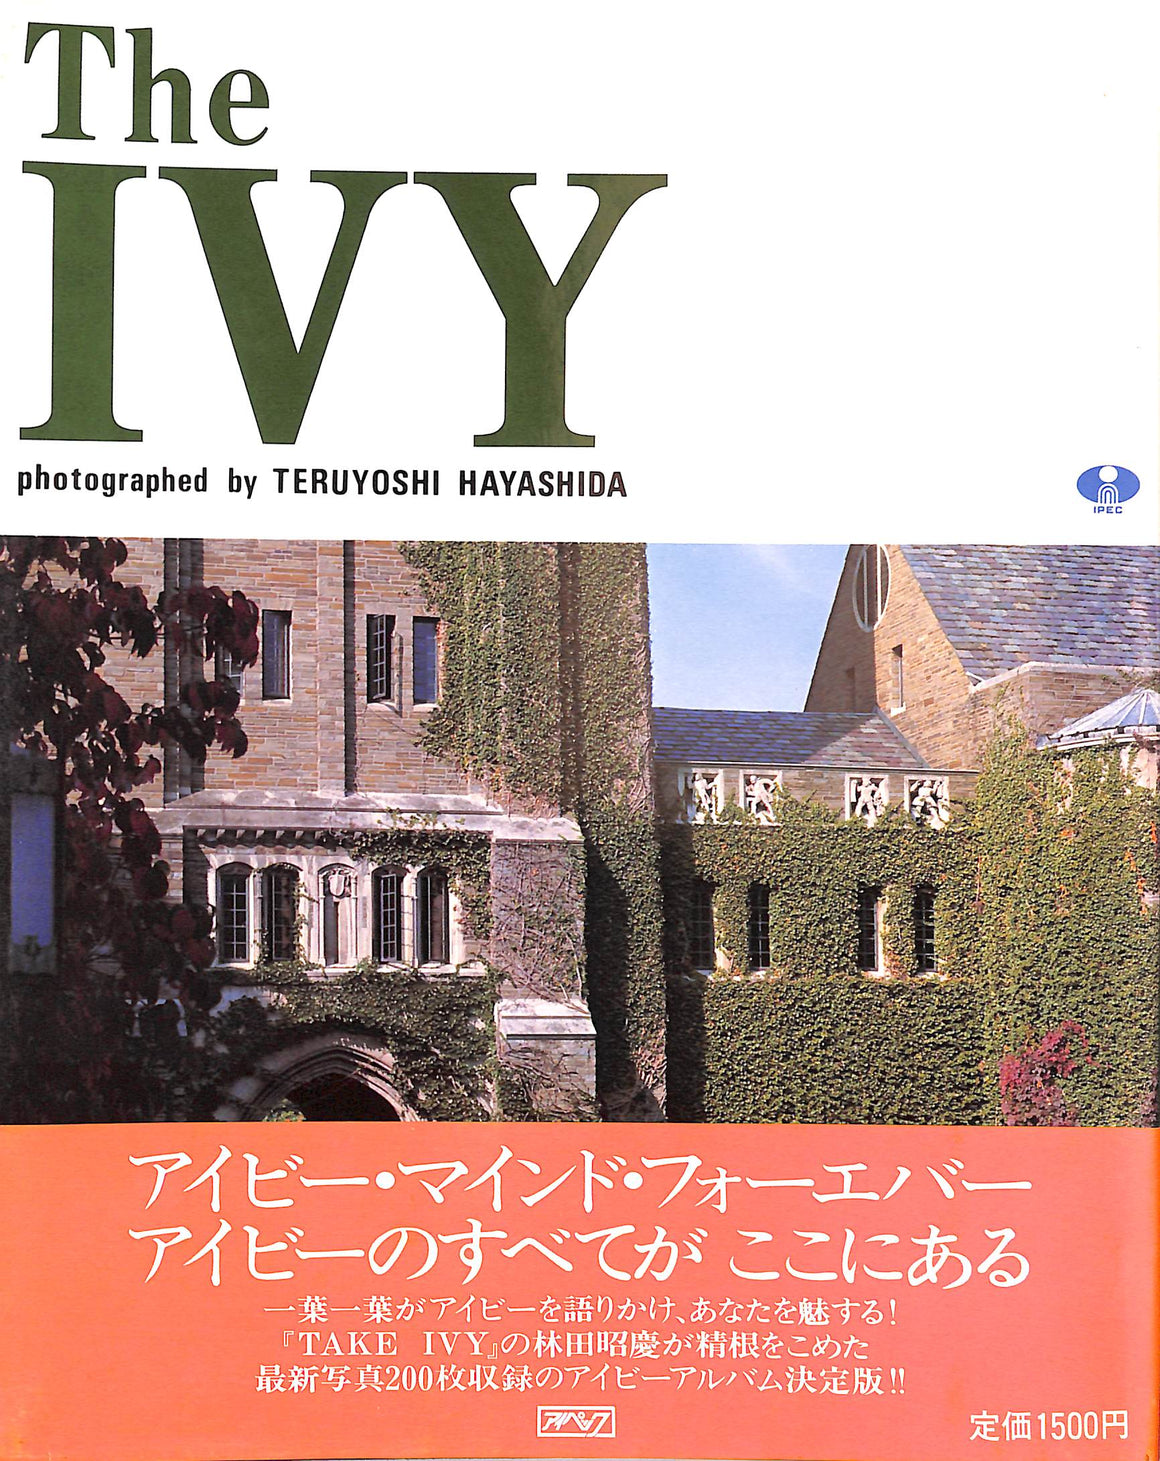 "The Ivy" 1983 HAYASHIDA, Teruyoshi [photographed by]